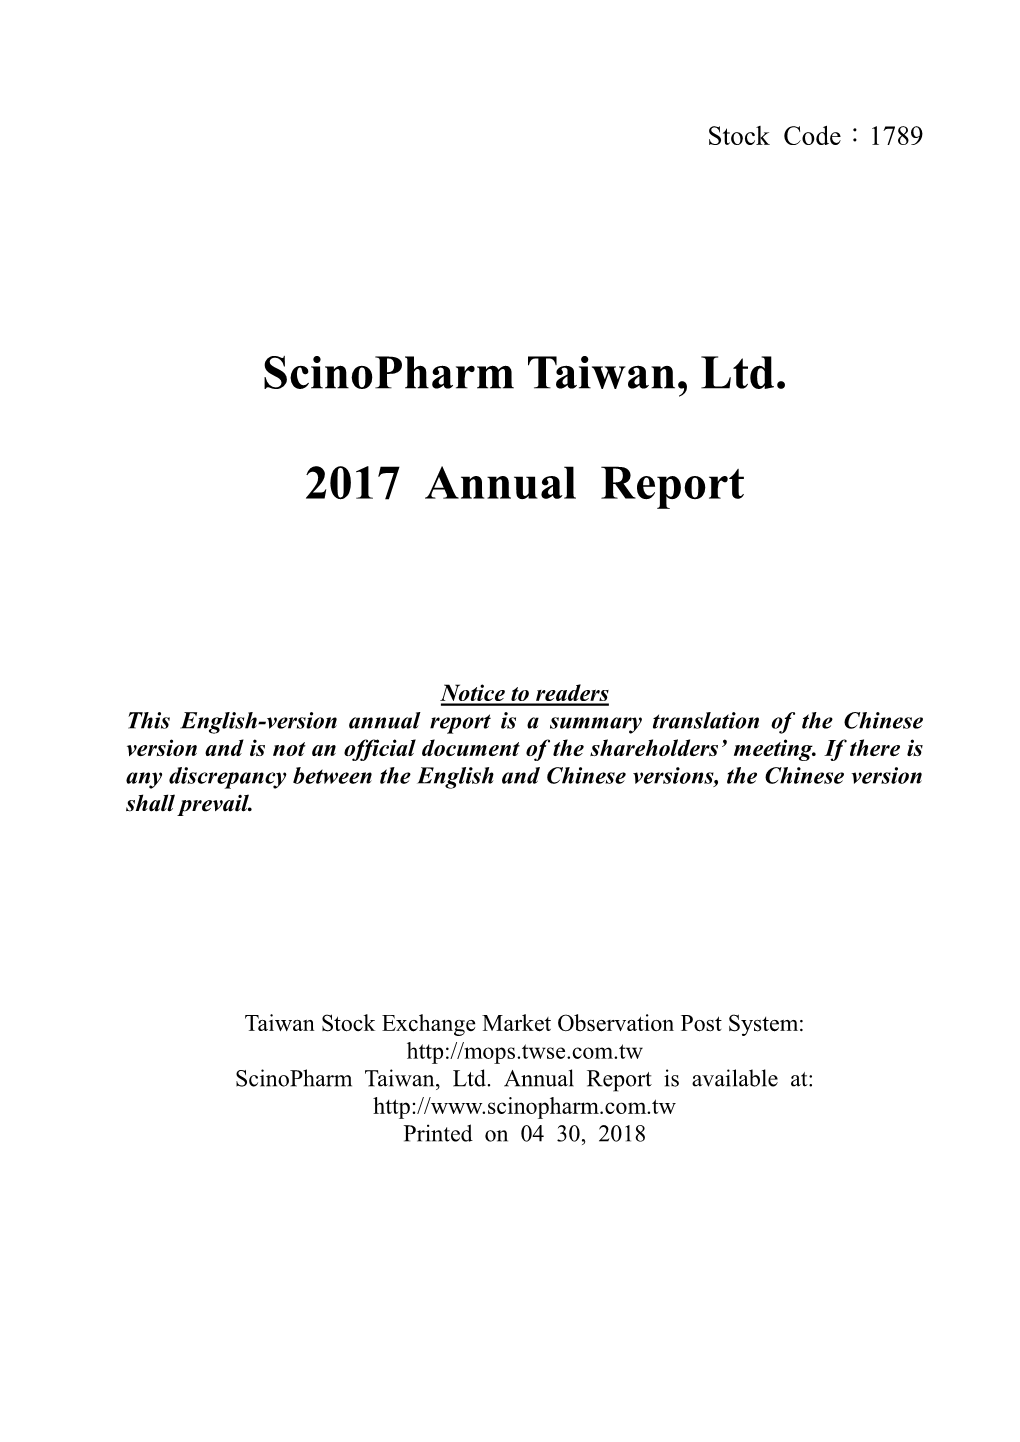 Scinopharm Taiwan, Ltd. 2017 Annual Report